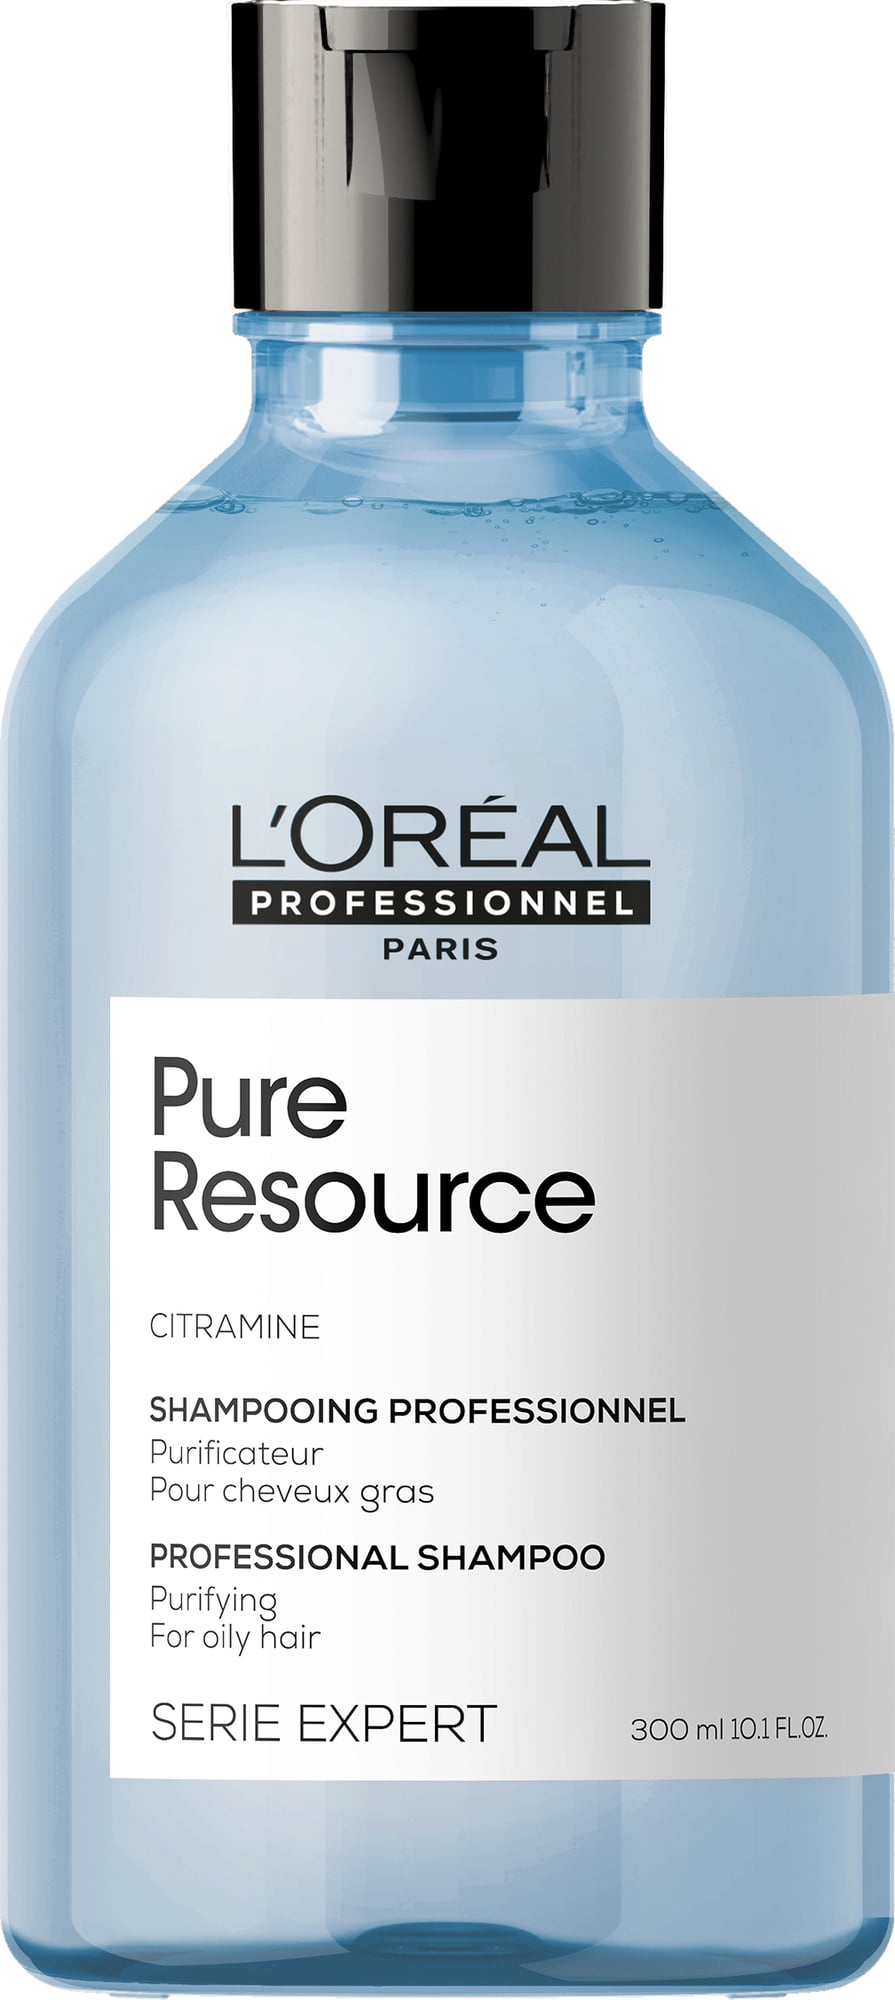 L'Oreal Professionnel Pure Resource Professional Shampoo